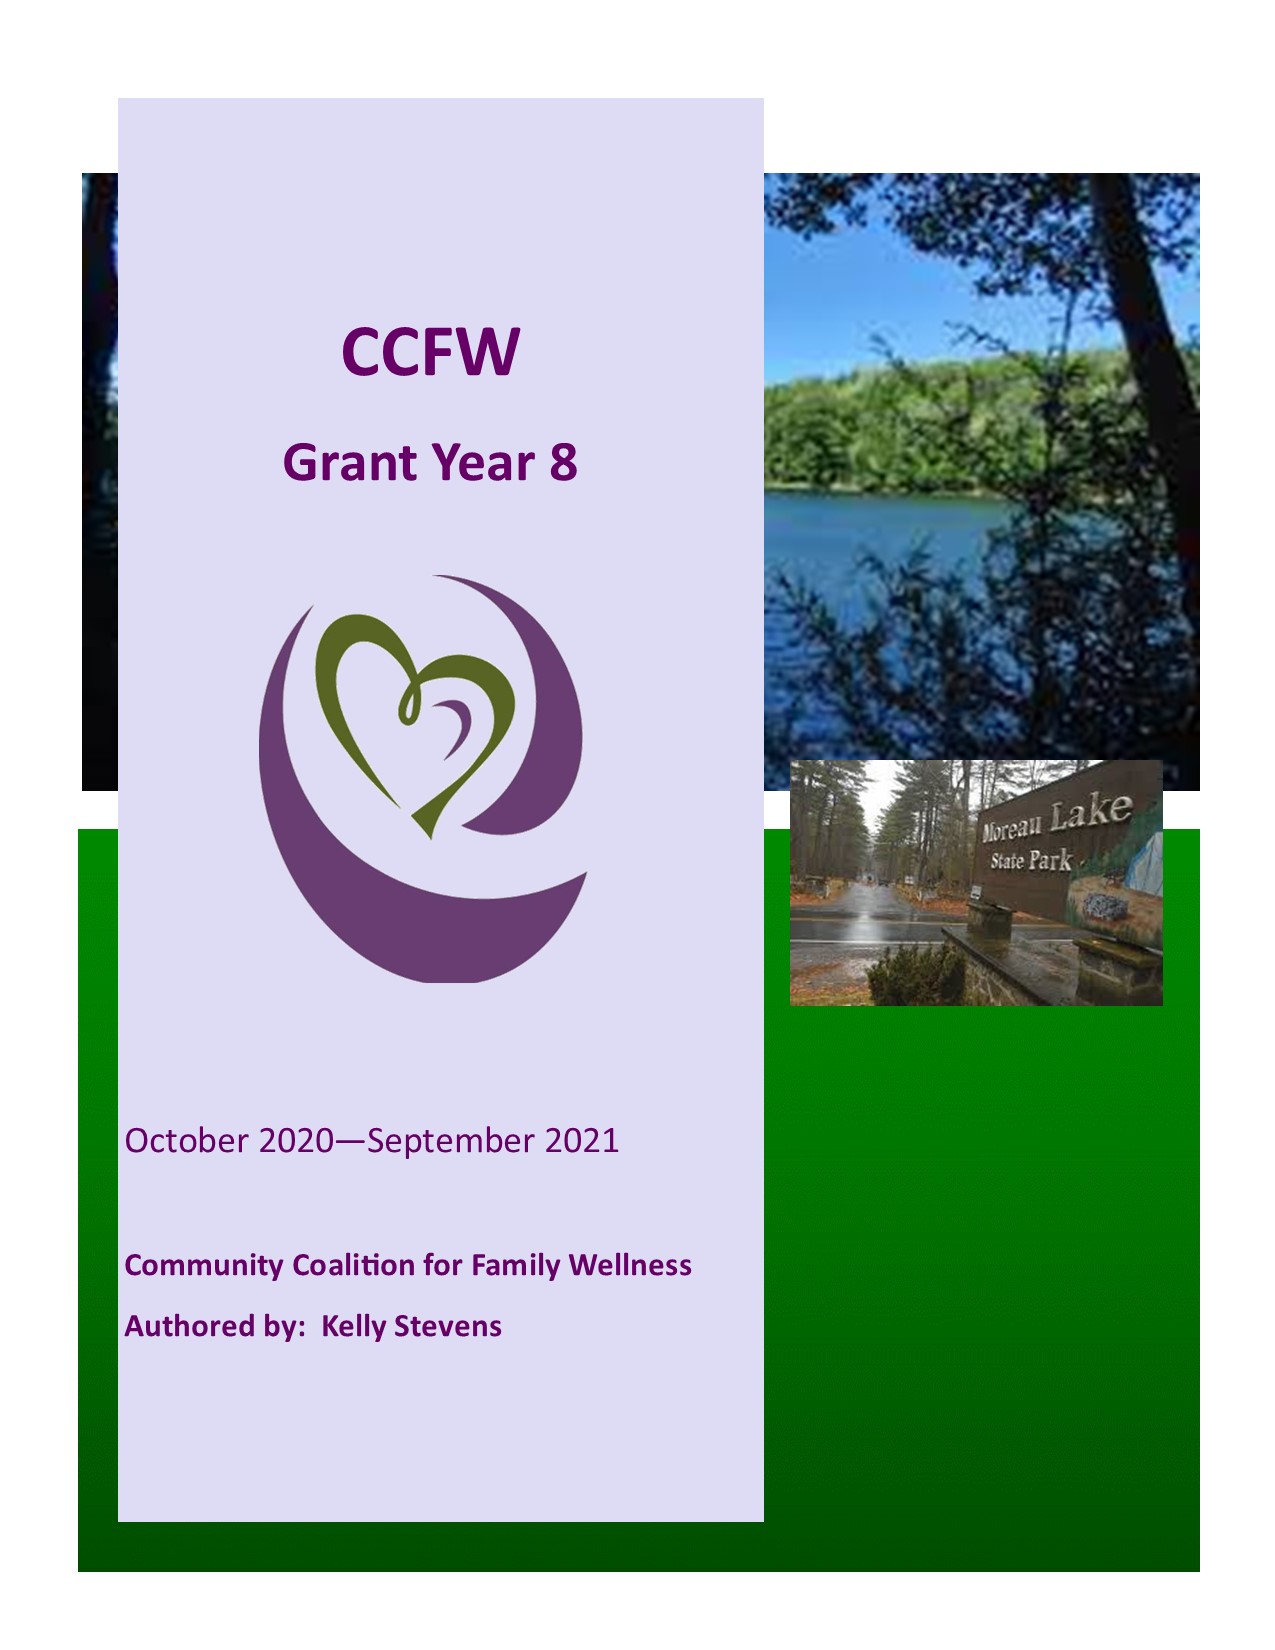 CCFW Annual Report